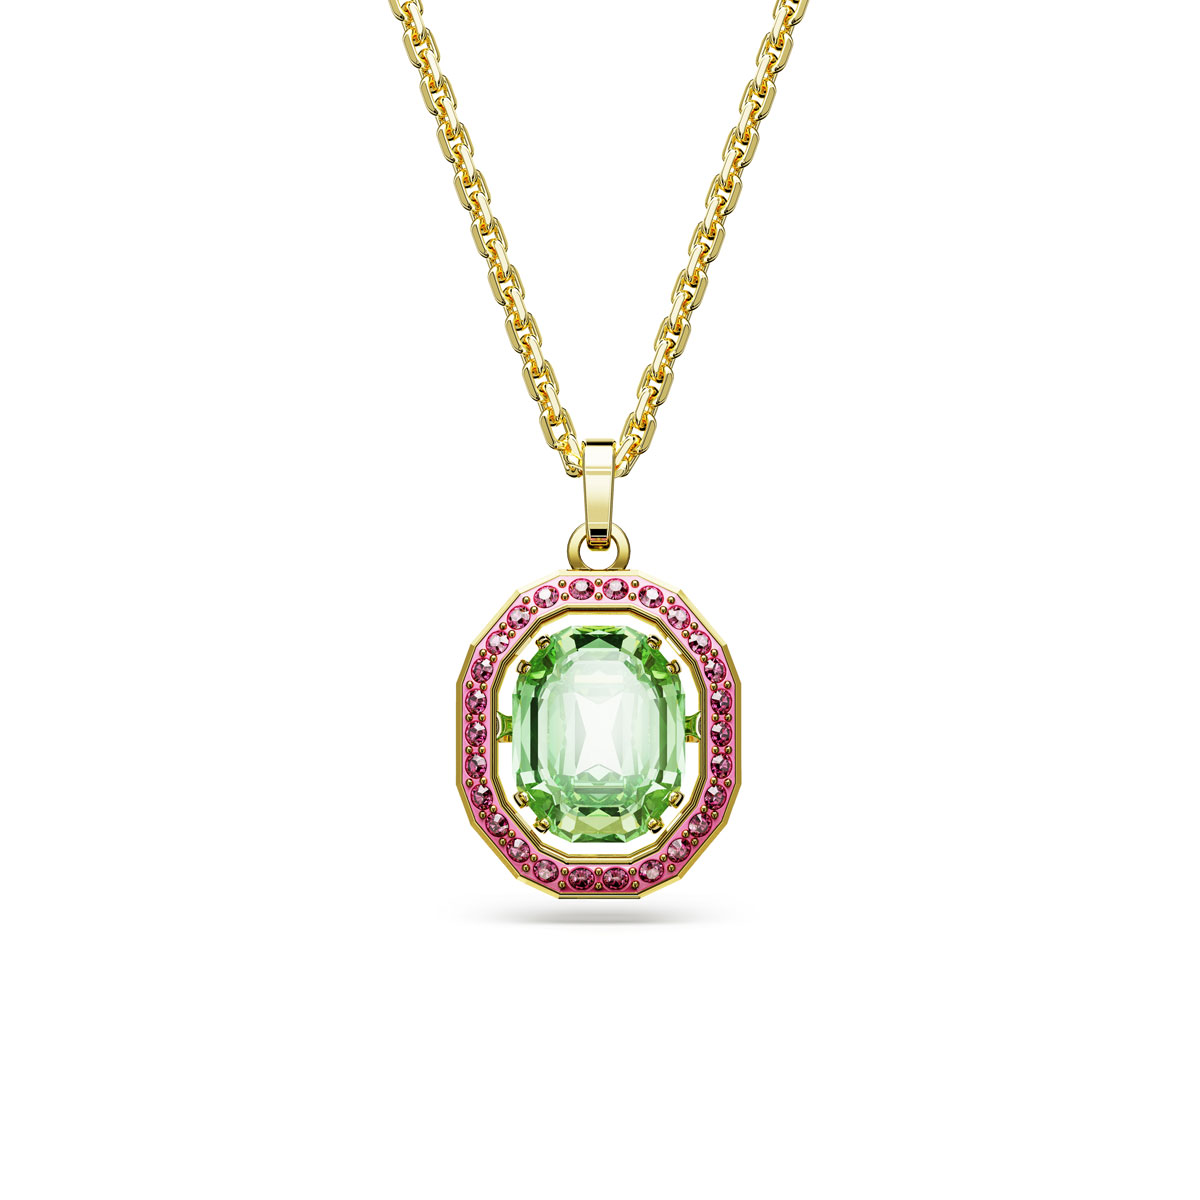 Swarovski Jewelry Necklace Chroma, Pendant L Green, Gold